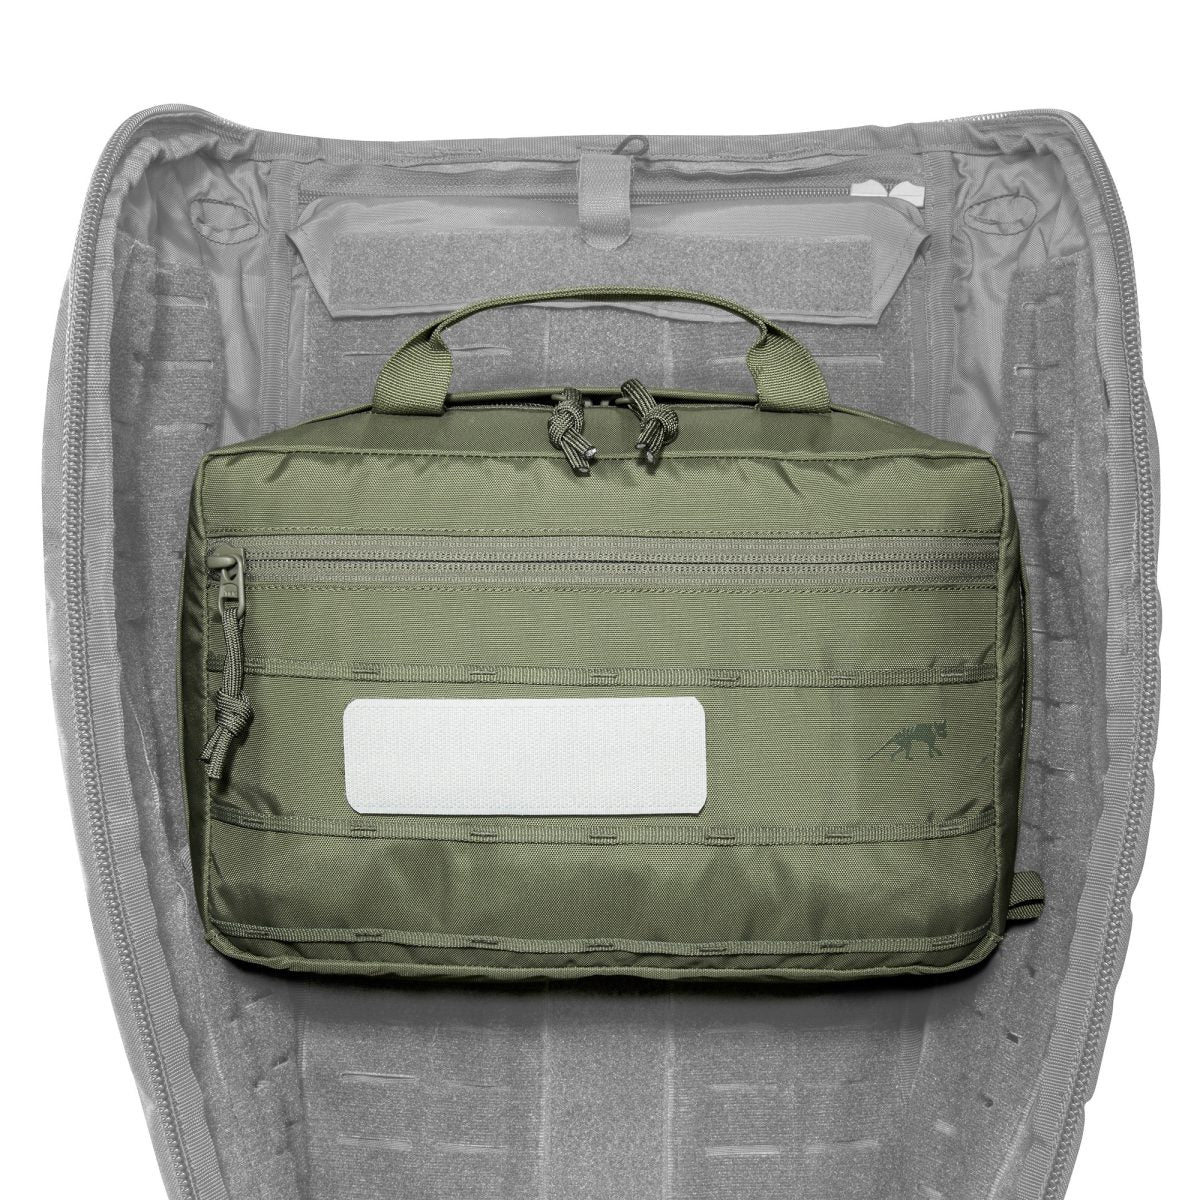 Tasmanian Tiger Multi Purpose Pouch VL Equipment Bag Bags, Packs and Cases Tasmanian Tiger Tactical Gear Supplier Tactical Distributors Australia